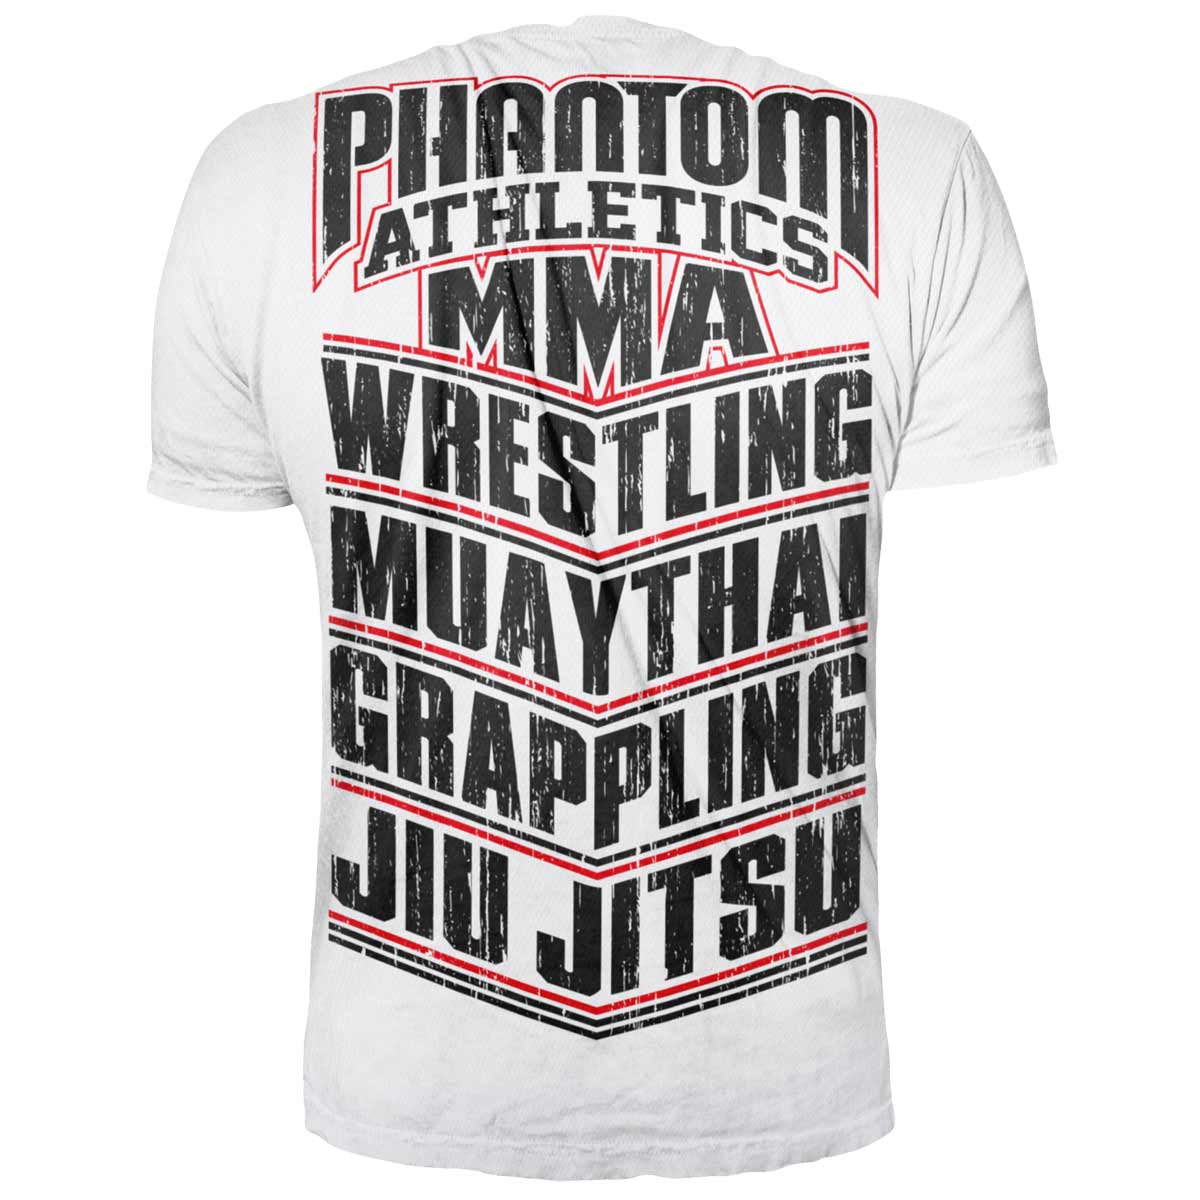 T-shirt Phantom για όλους τους πολεμικούς καλλιτέχνες. Με γράμματα MMA, WRESLING, MUAY THAI, GRAPPLING, JIU JITSU. Ιδανικό για την προπόνησή σας στον αγώνα.